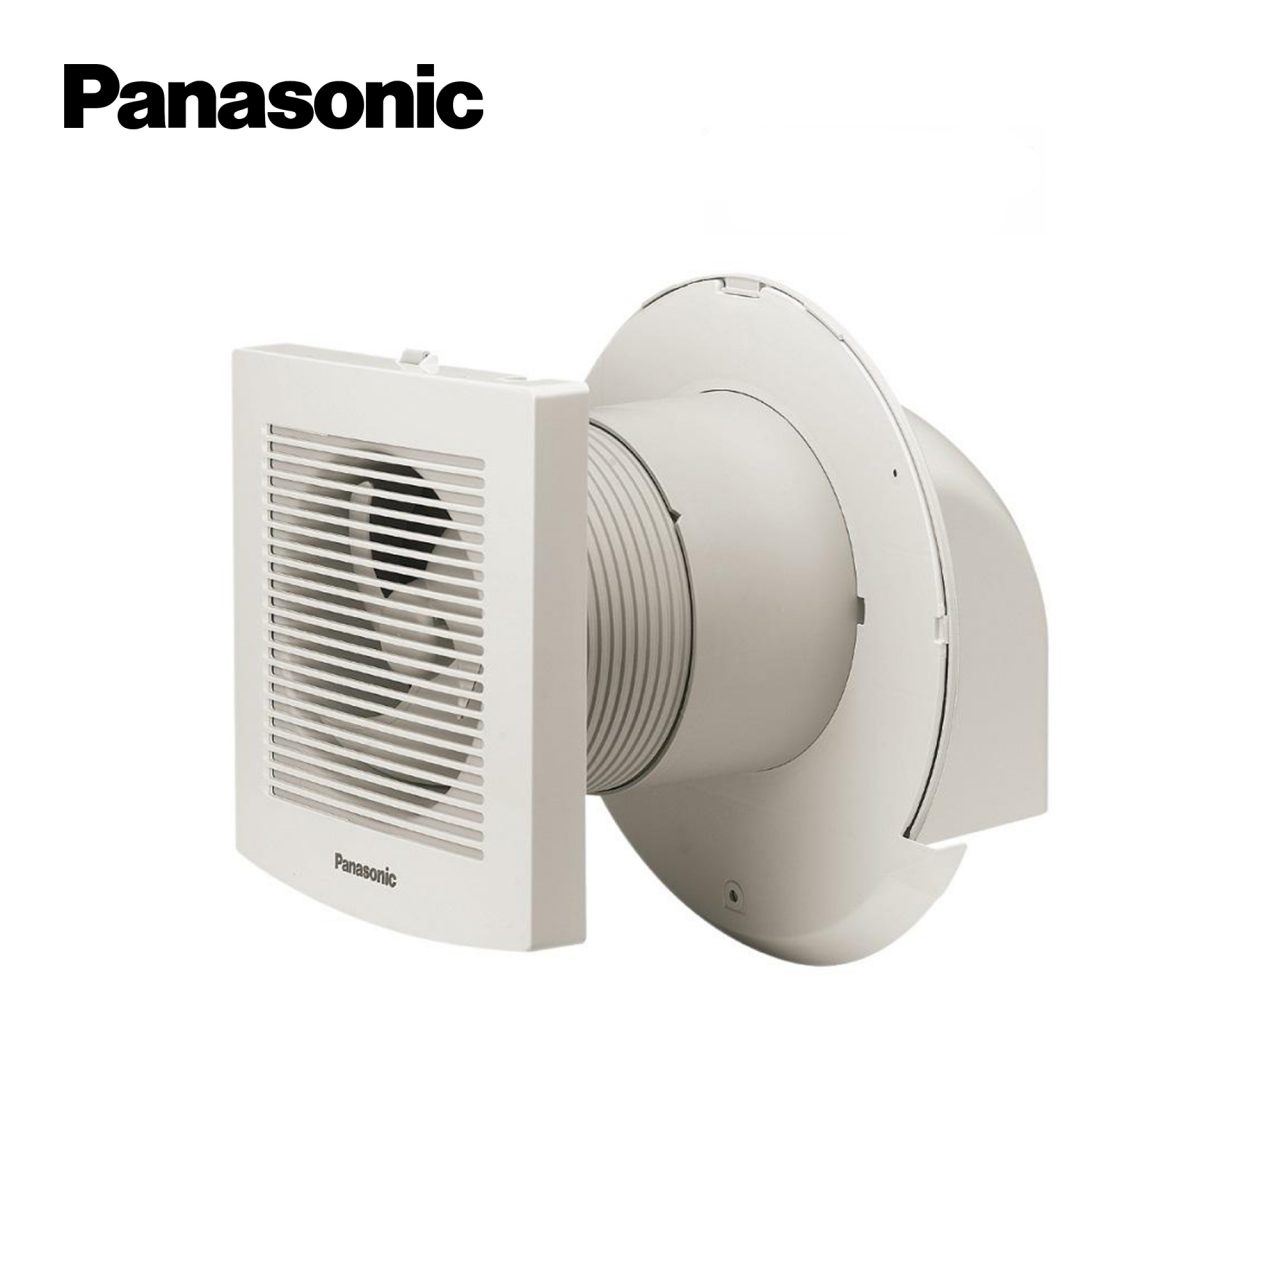 Panasonic FV-15EGK1 Wall Suction Exhaust Fan | shopbrills.com